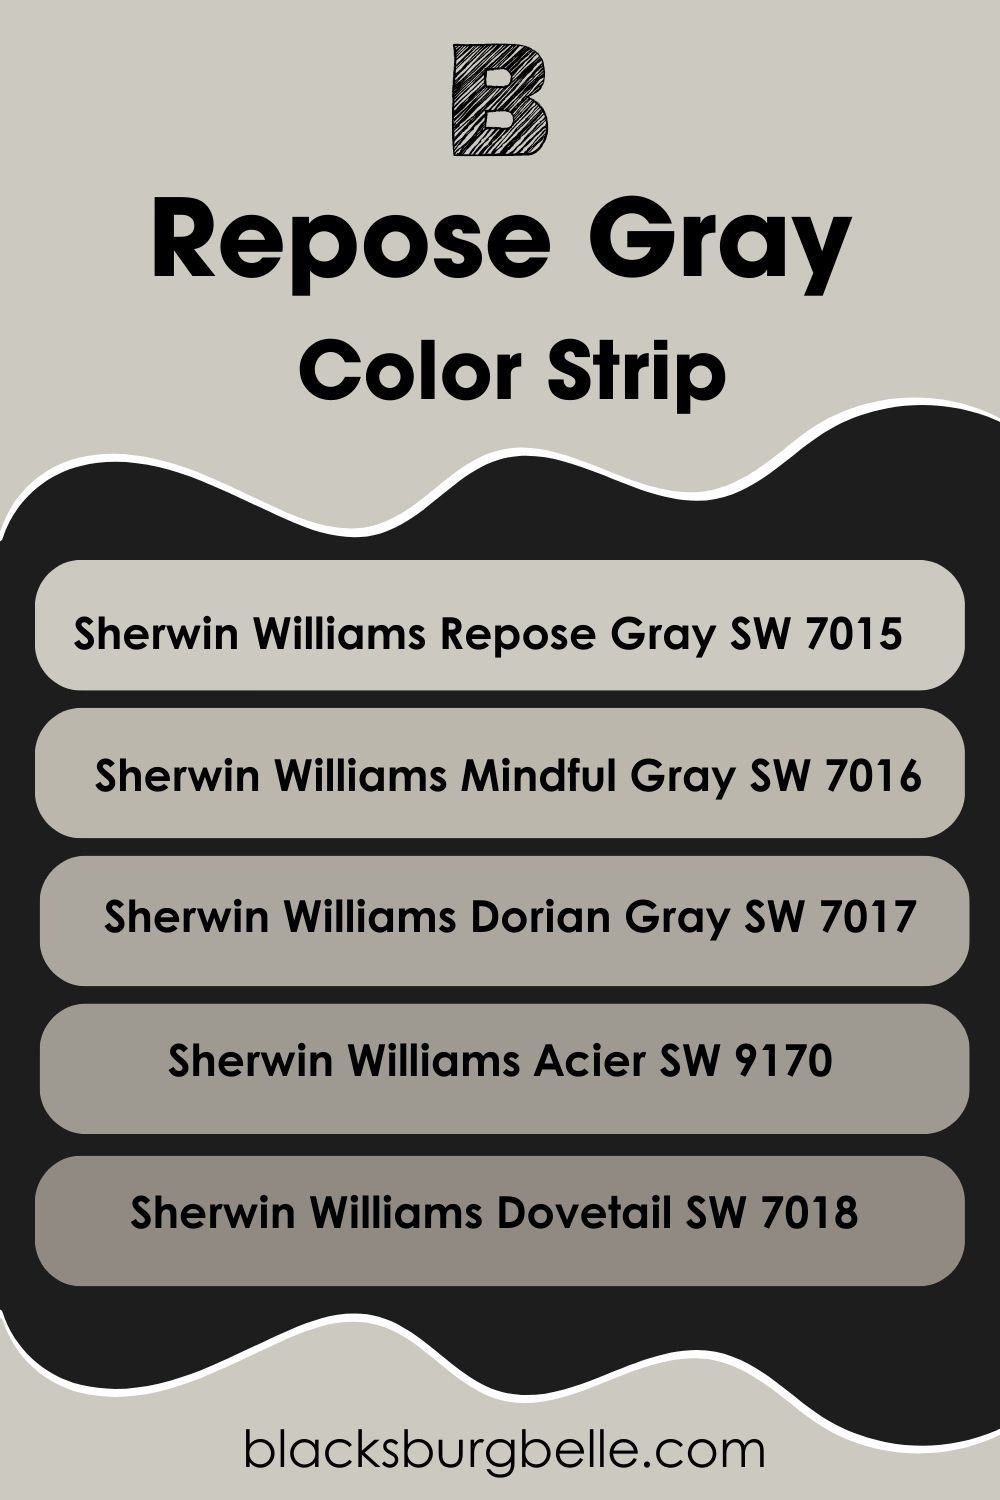 Repose Gray Color Strip